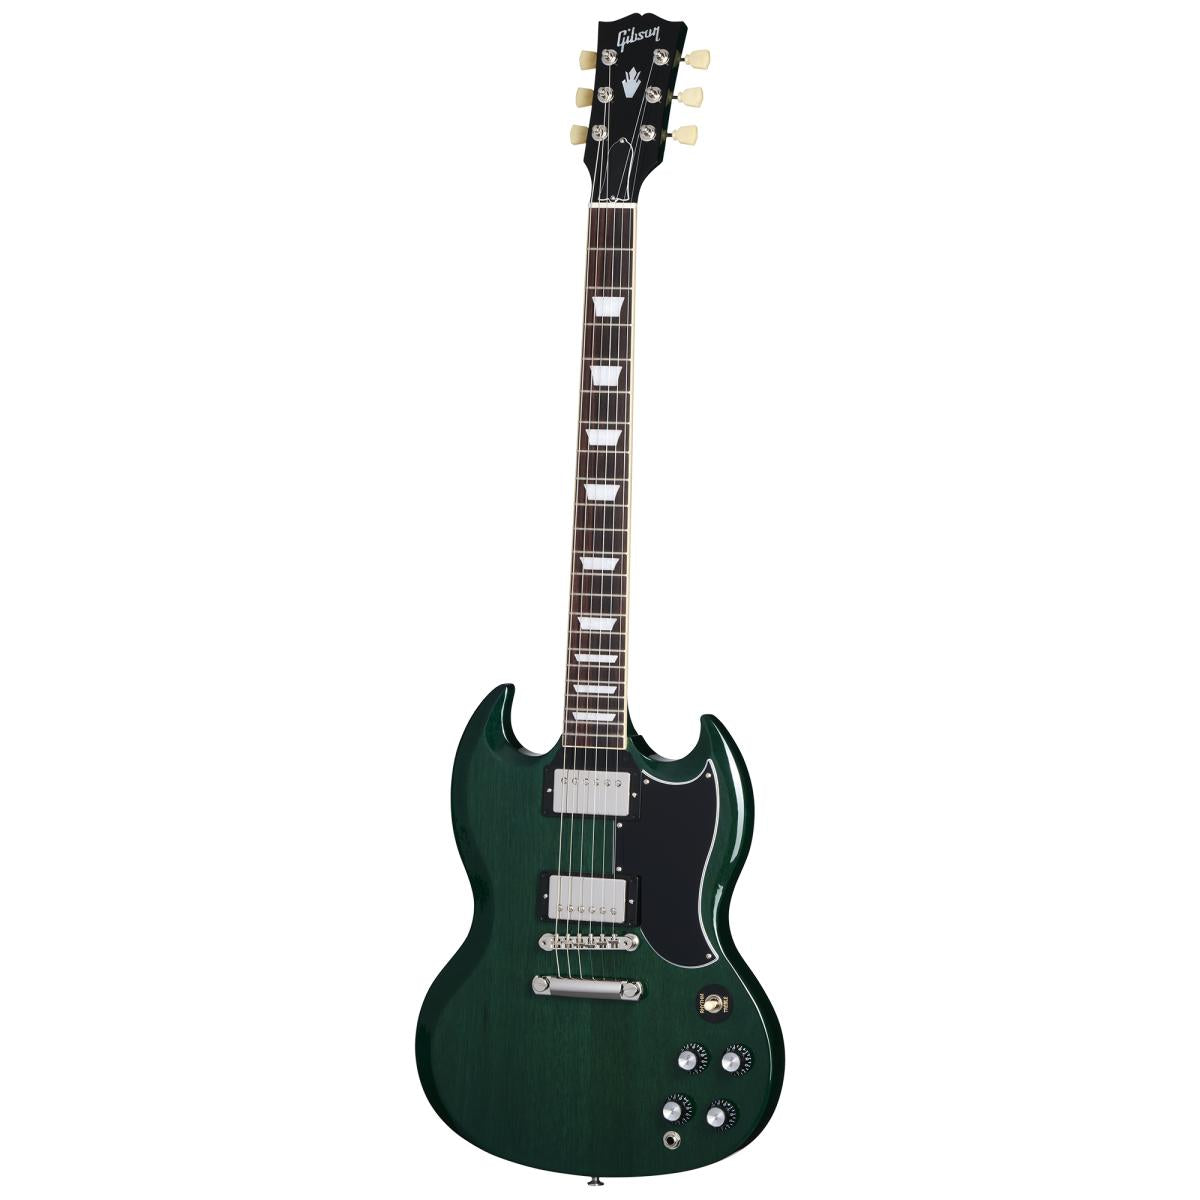 Gibson SG Standard 61 Electric Guitar Translucent Teal w/ Hardcase